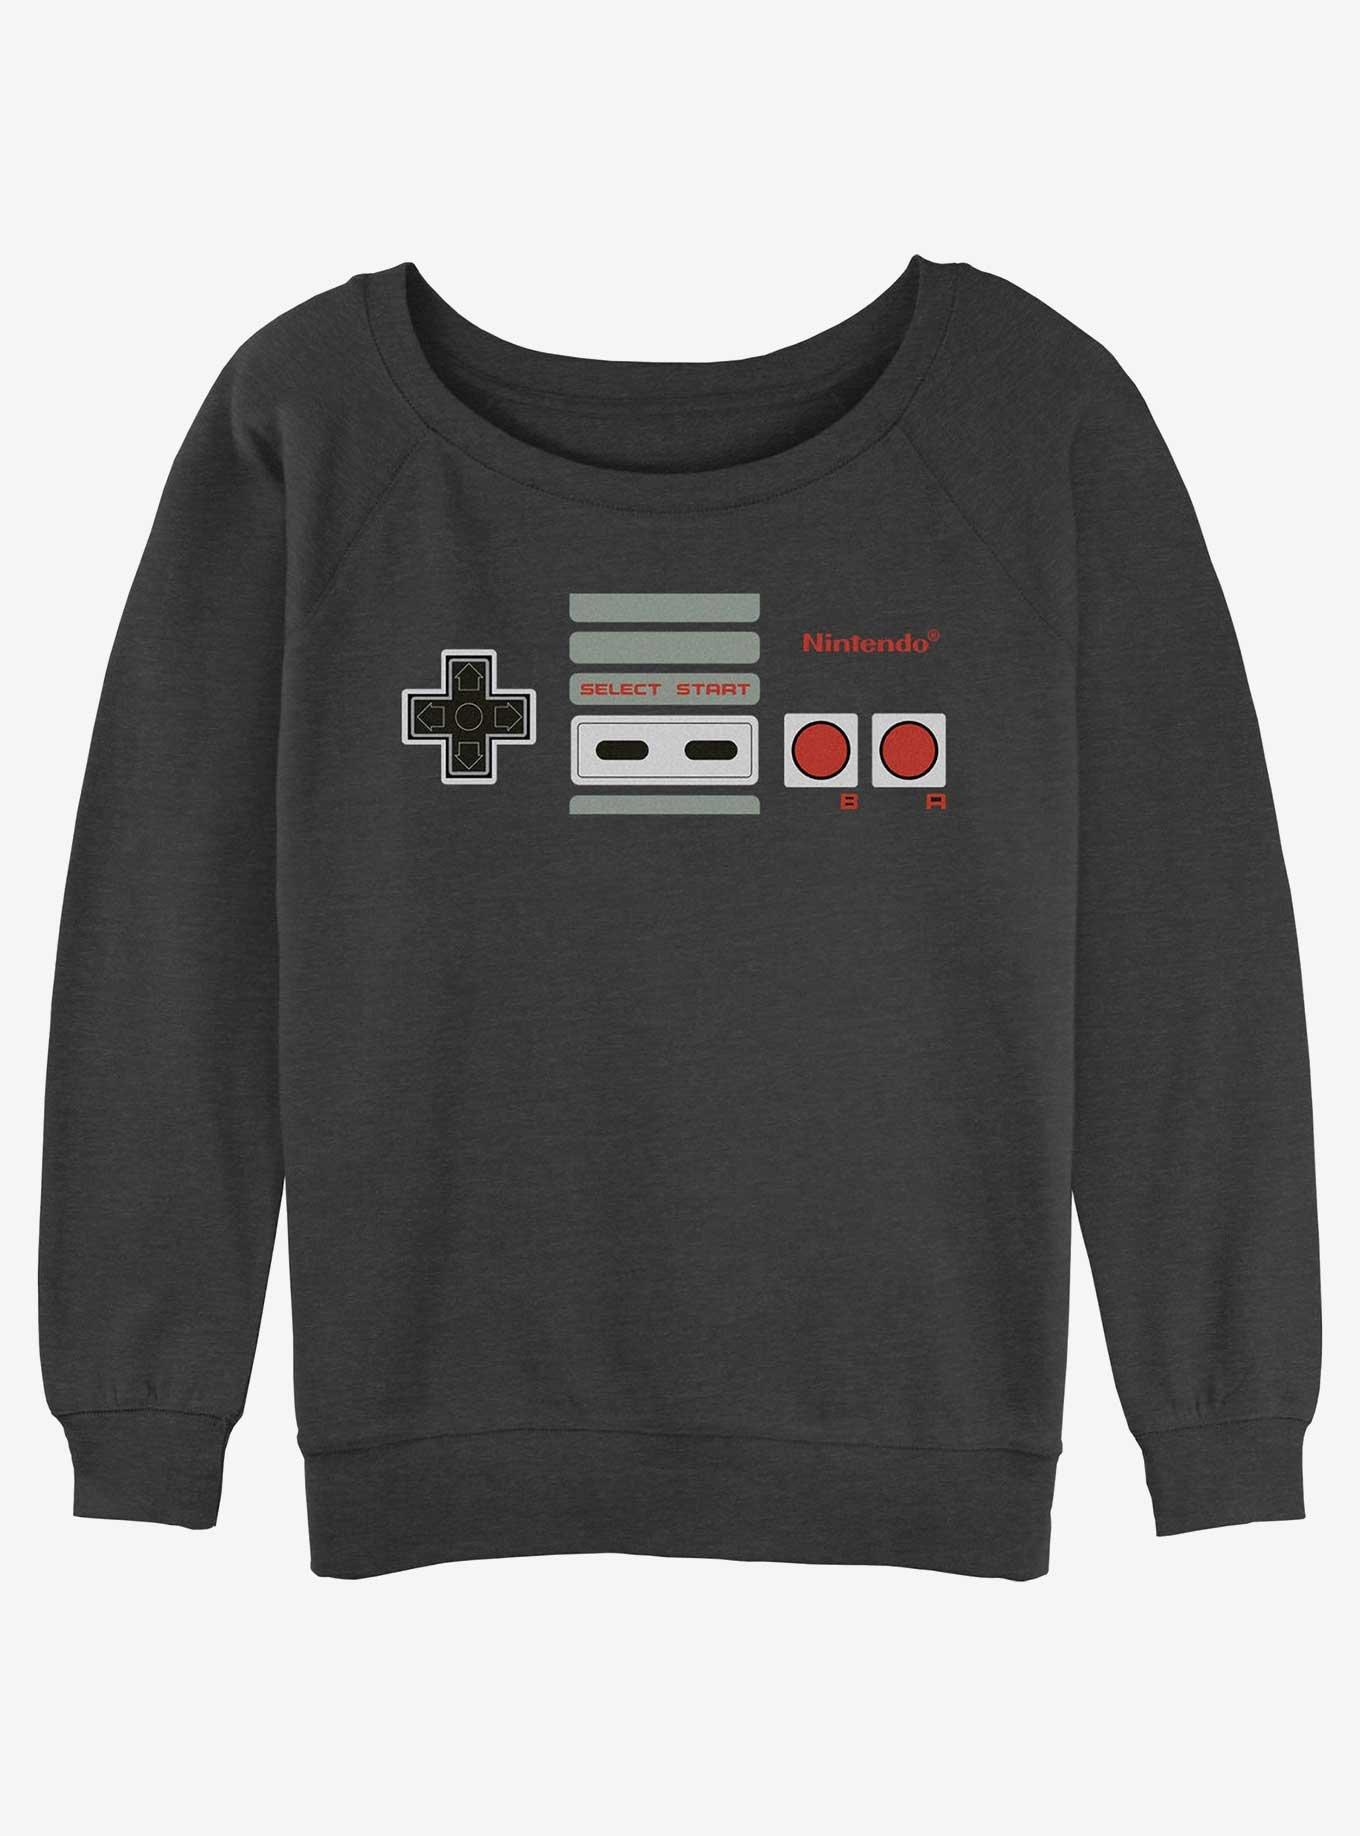 Nintendo Classic Controller Girls Slouchy Sweatshirt, CHAR HTR, hi-res